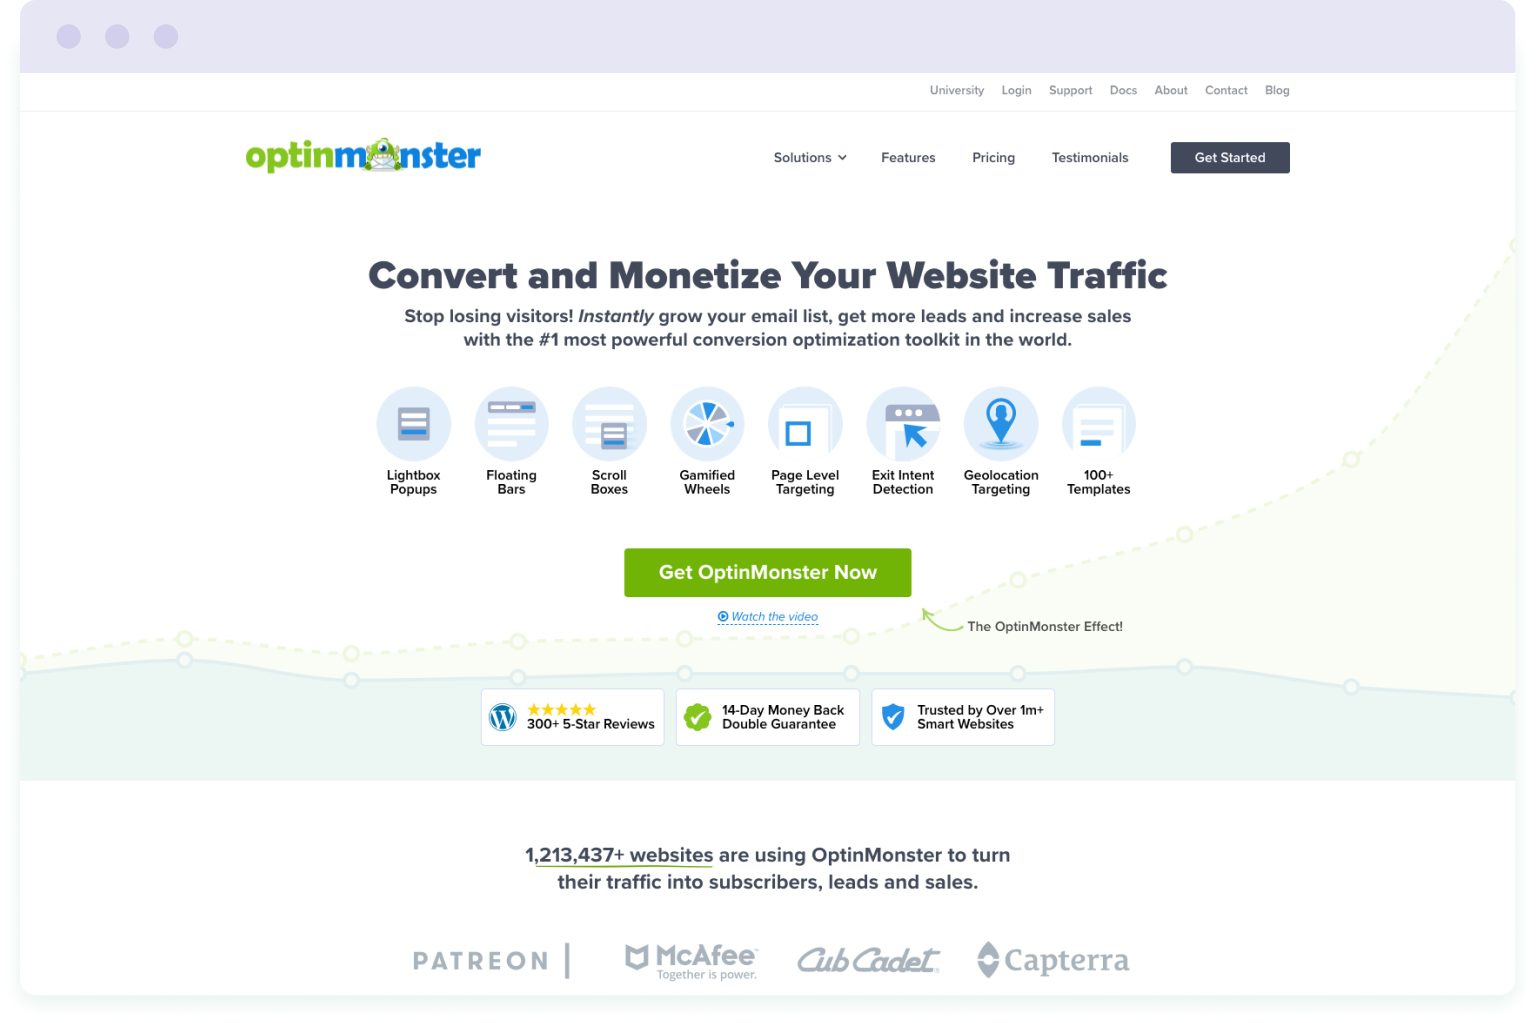 Image of the OptinMonster website homepage
